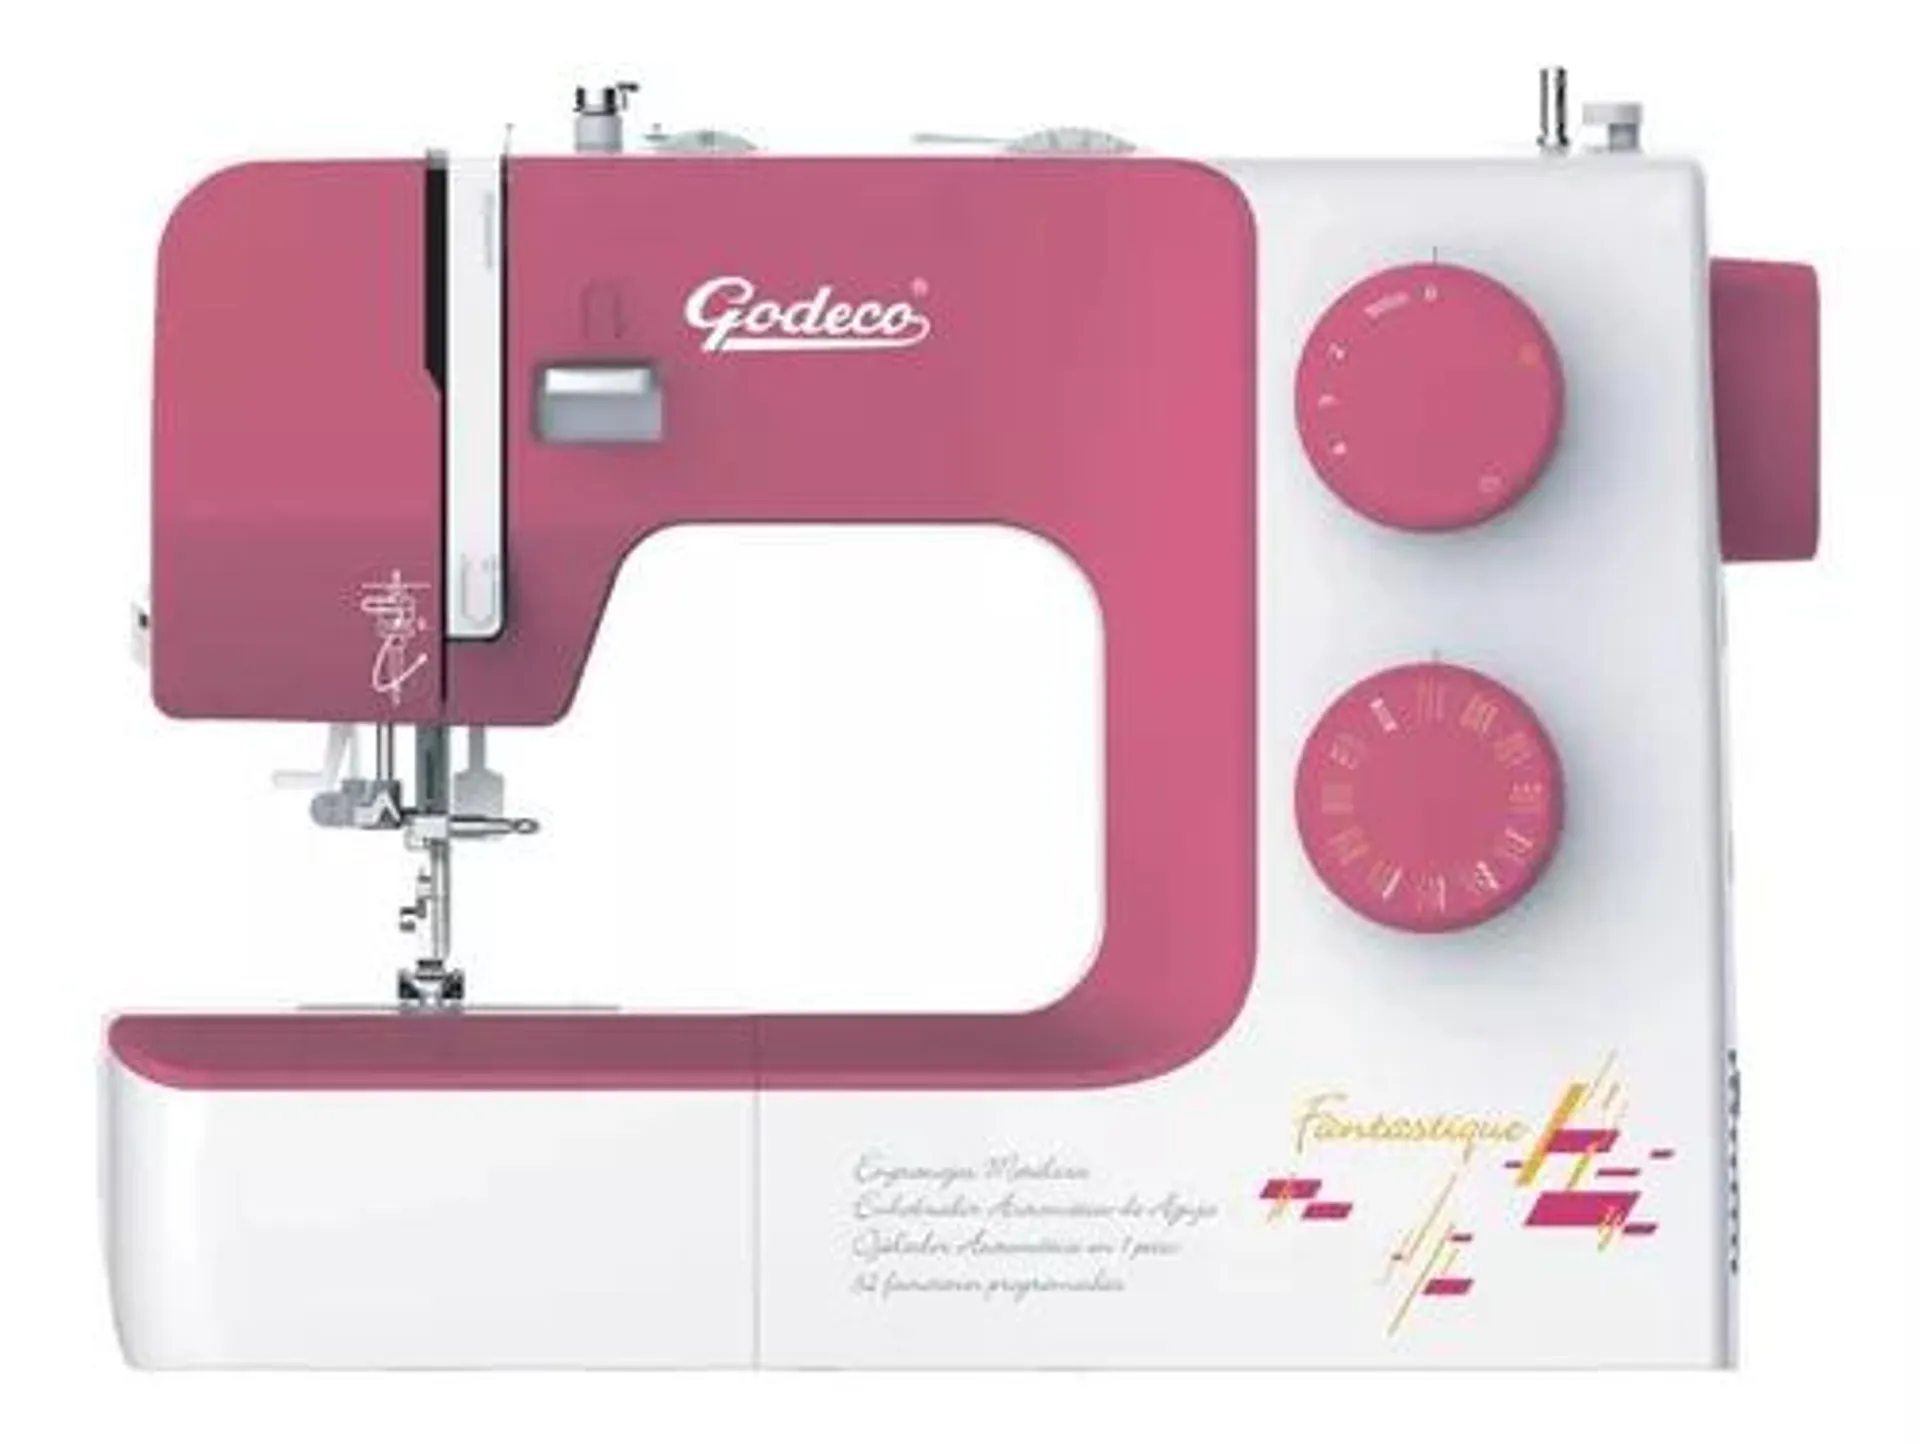 Máquina de coser rectarecta Godeco Fantastique blanca y rosa 220V